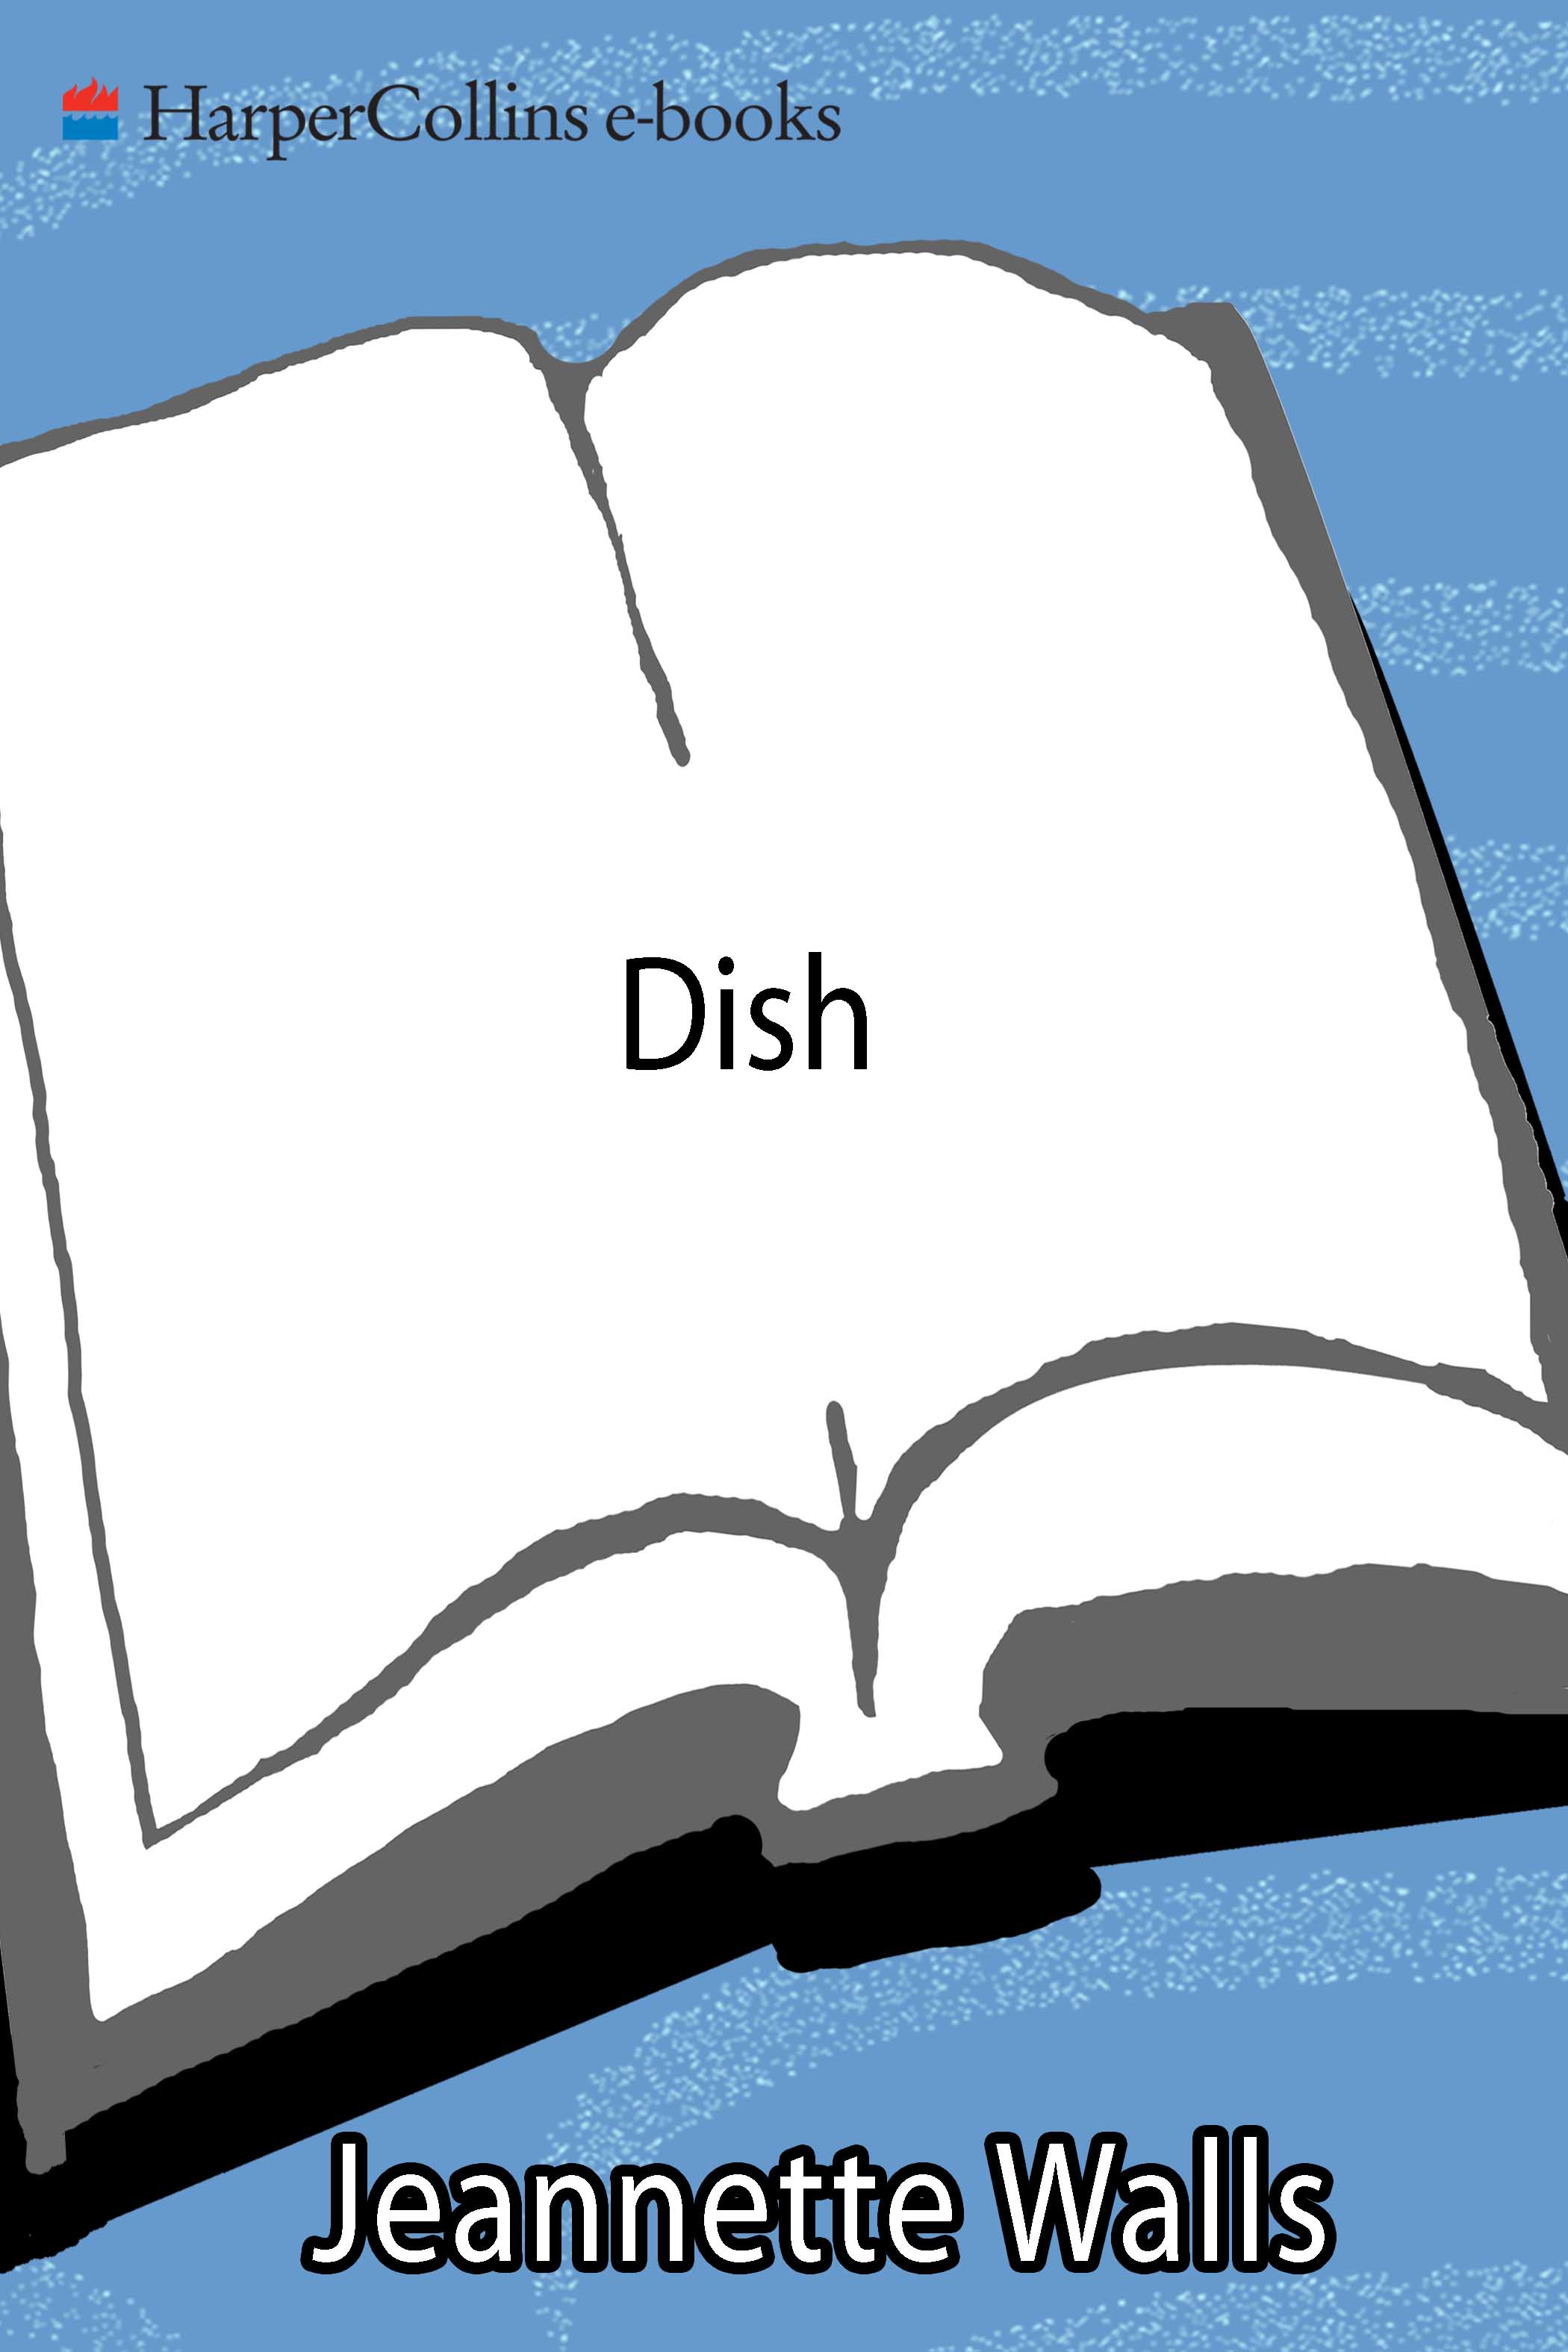 Dish (2000) by Jeannette Walls